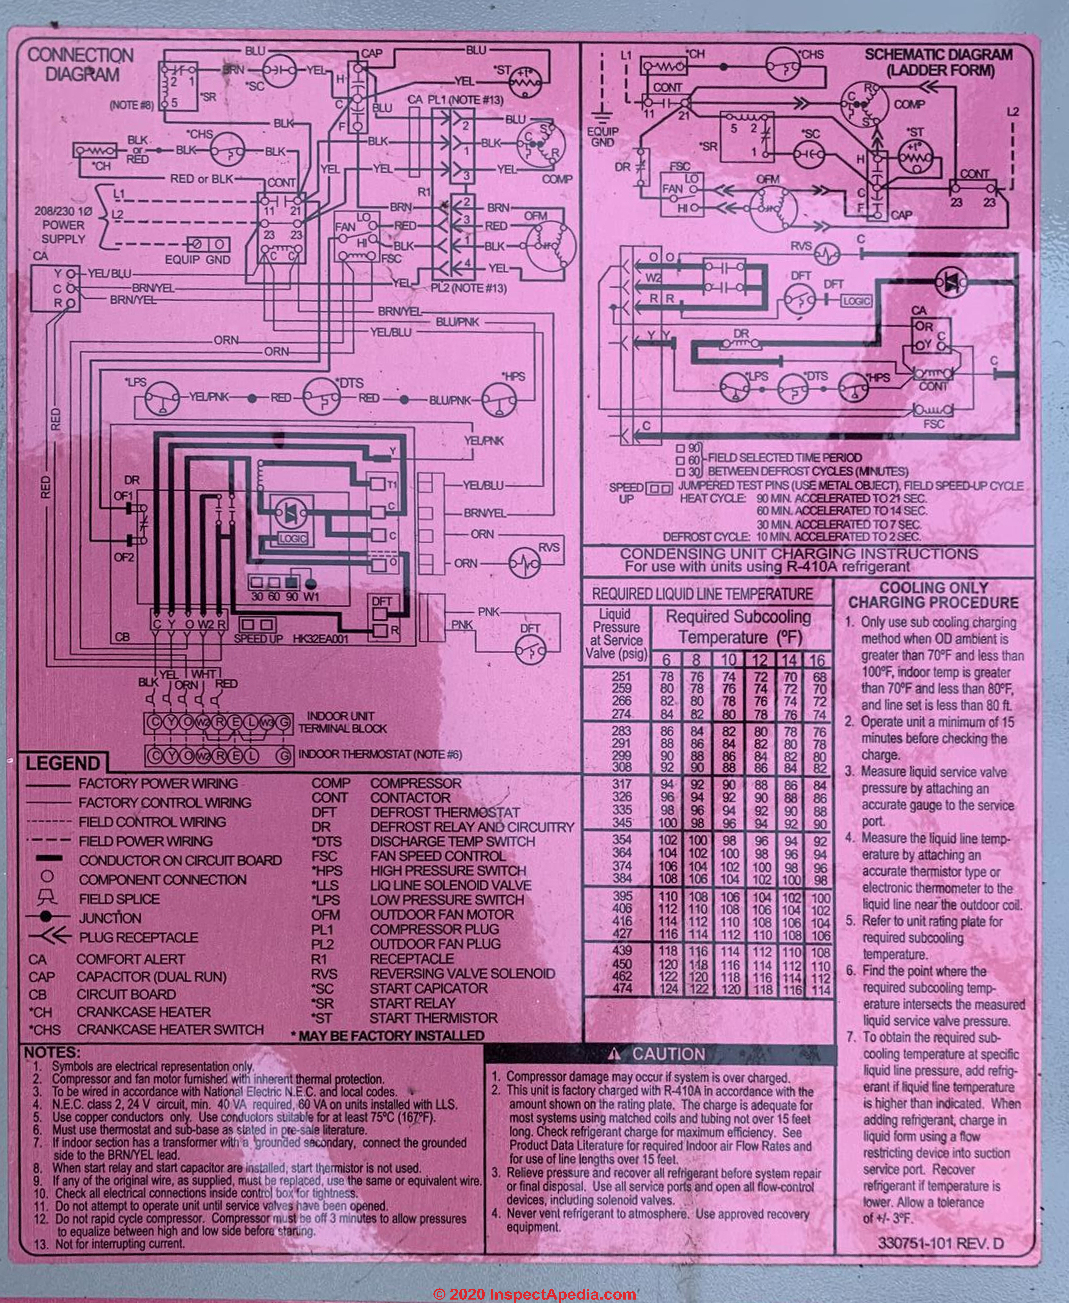 Condensing Fan Motor Wiring Diagram from inspectapedia.com